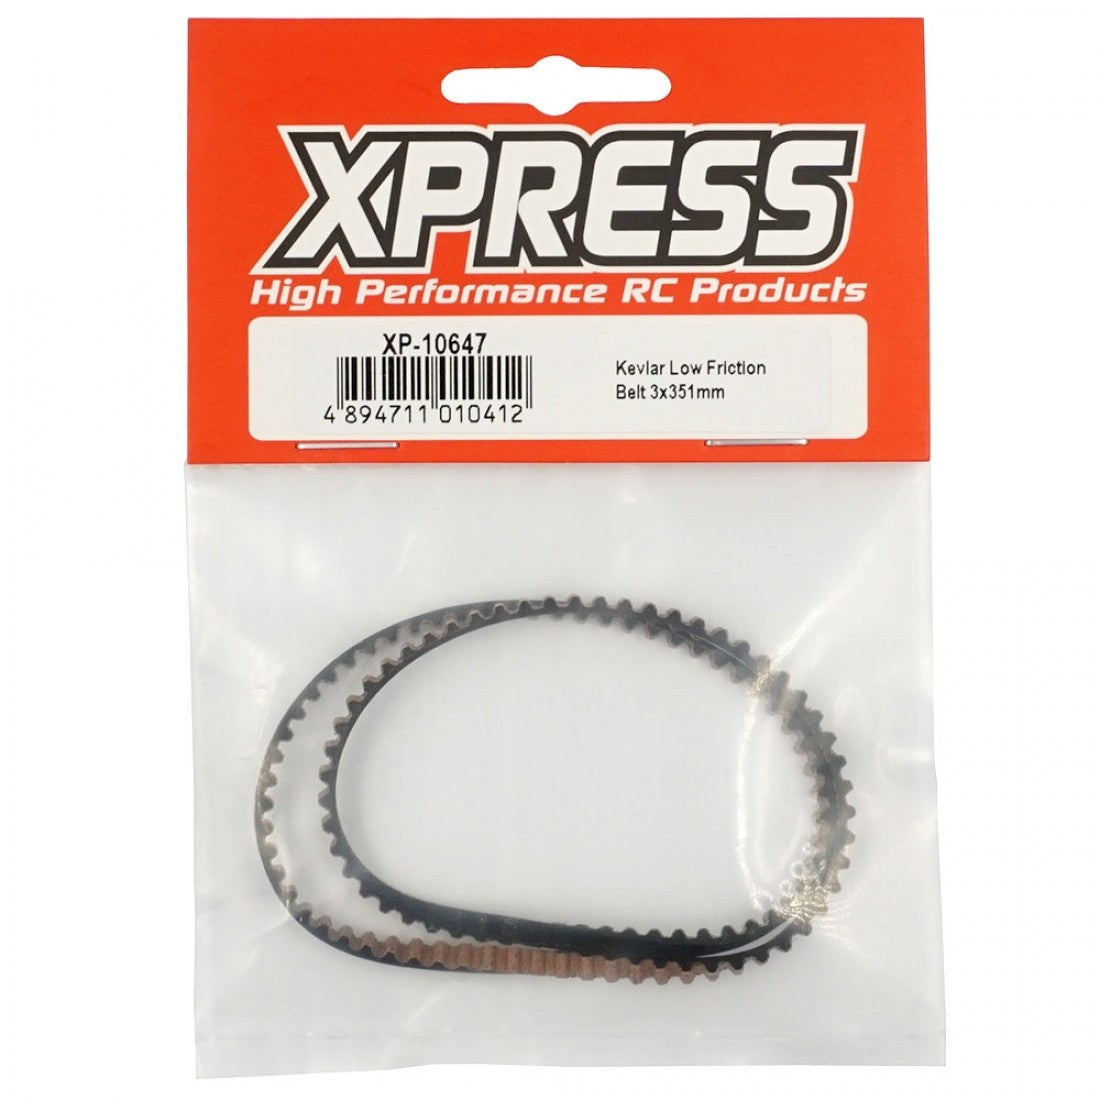 Xpress XP-10647 Kevlar Low Friction Belt 3x351mm for XQ10 T4-2021